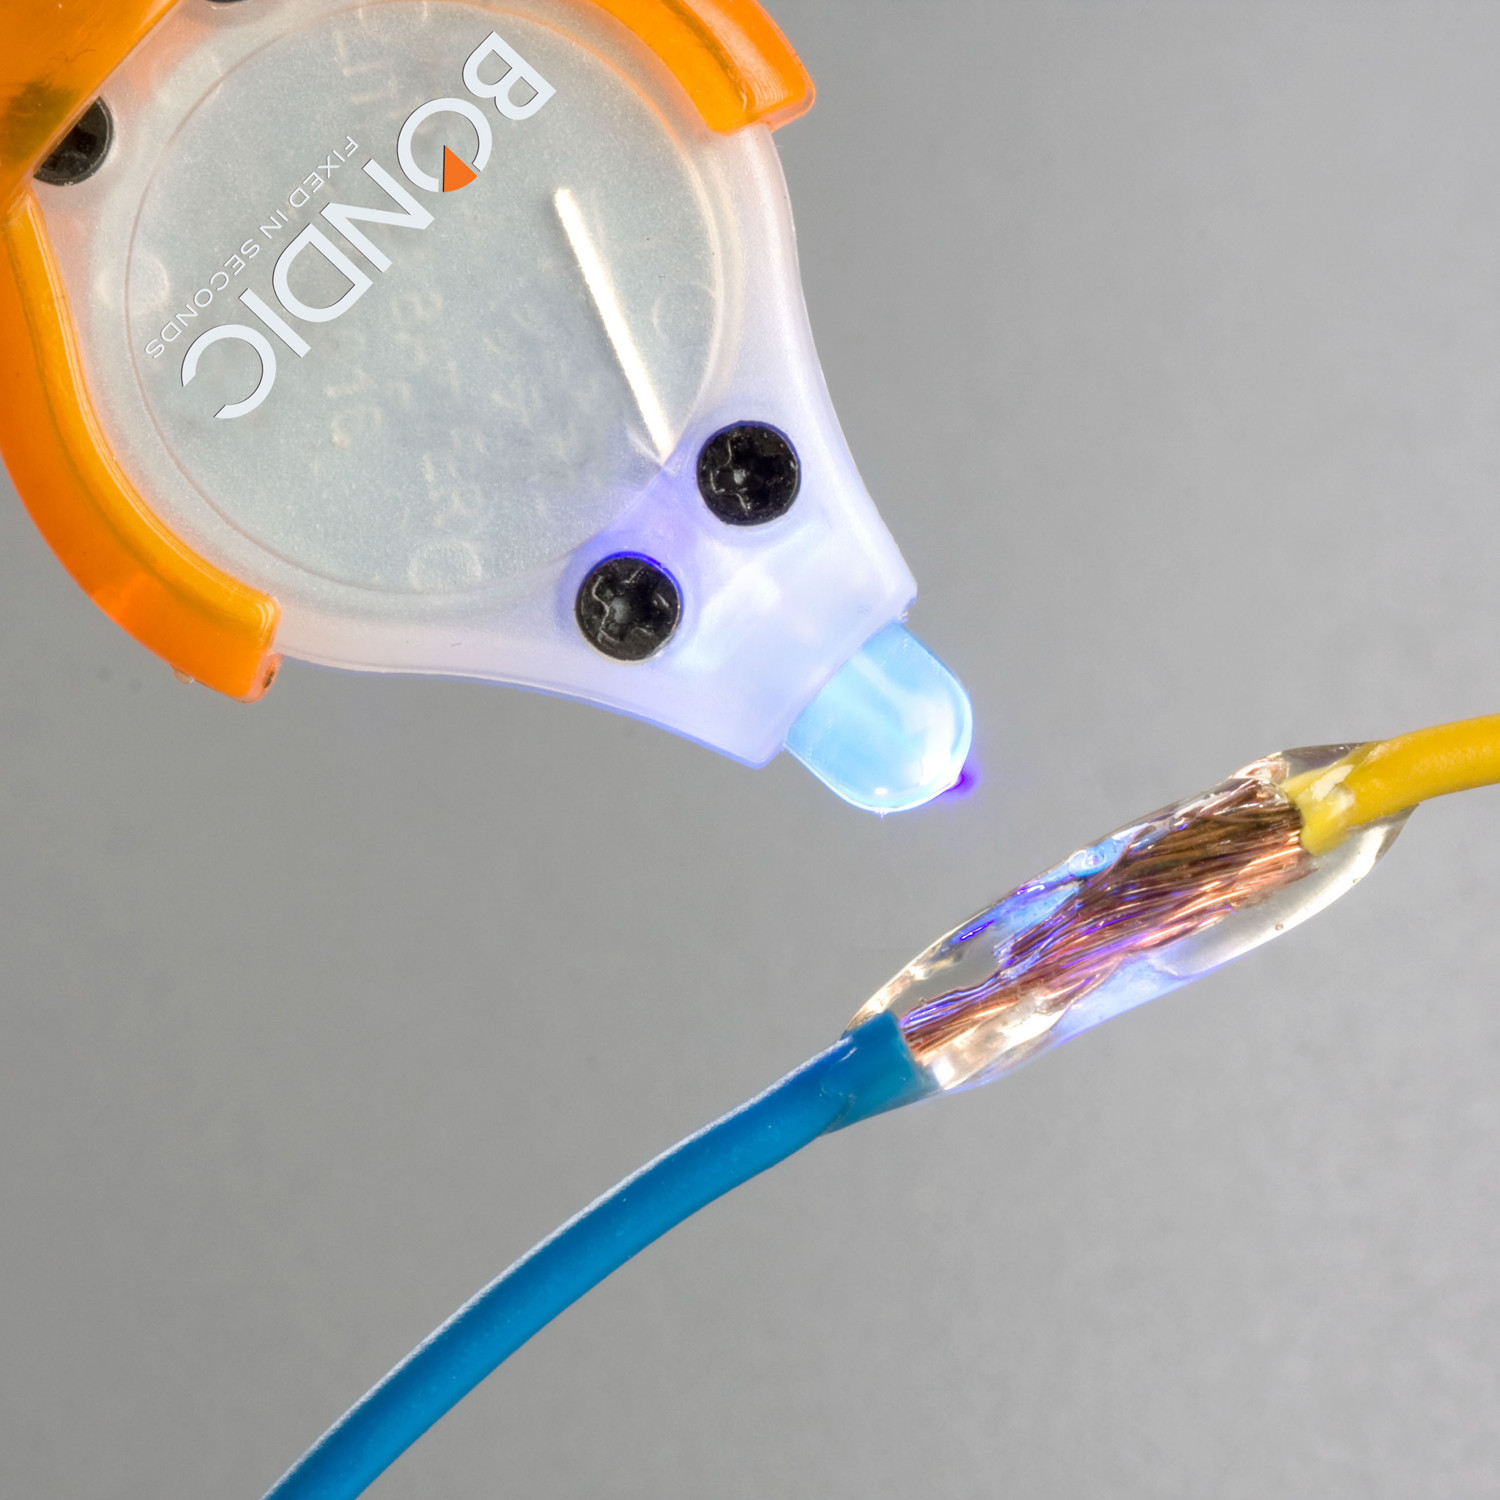 Bondic uses UV light and liquid plastic for quick-fix results 